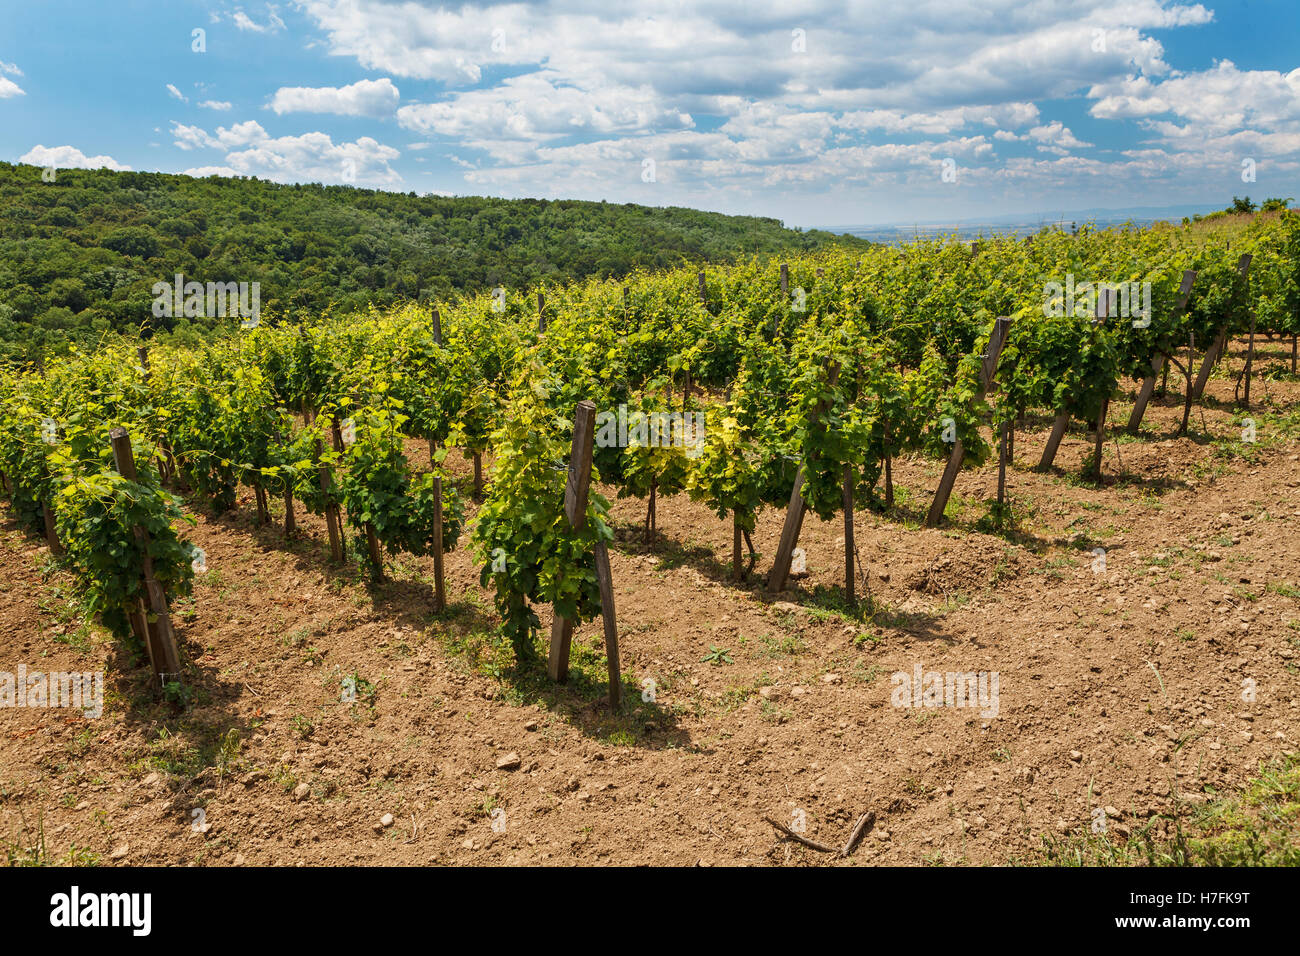 Vineyard - green viticulture under blue cloudy sky, Tokaj, Hungary, Europe Stock Photo